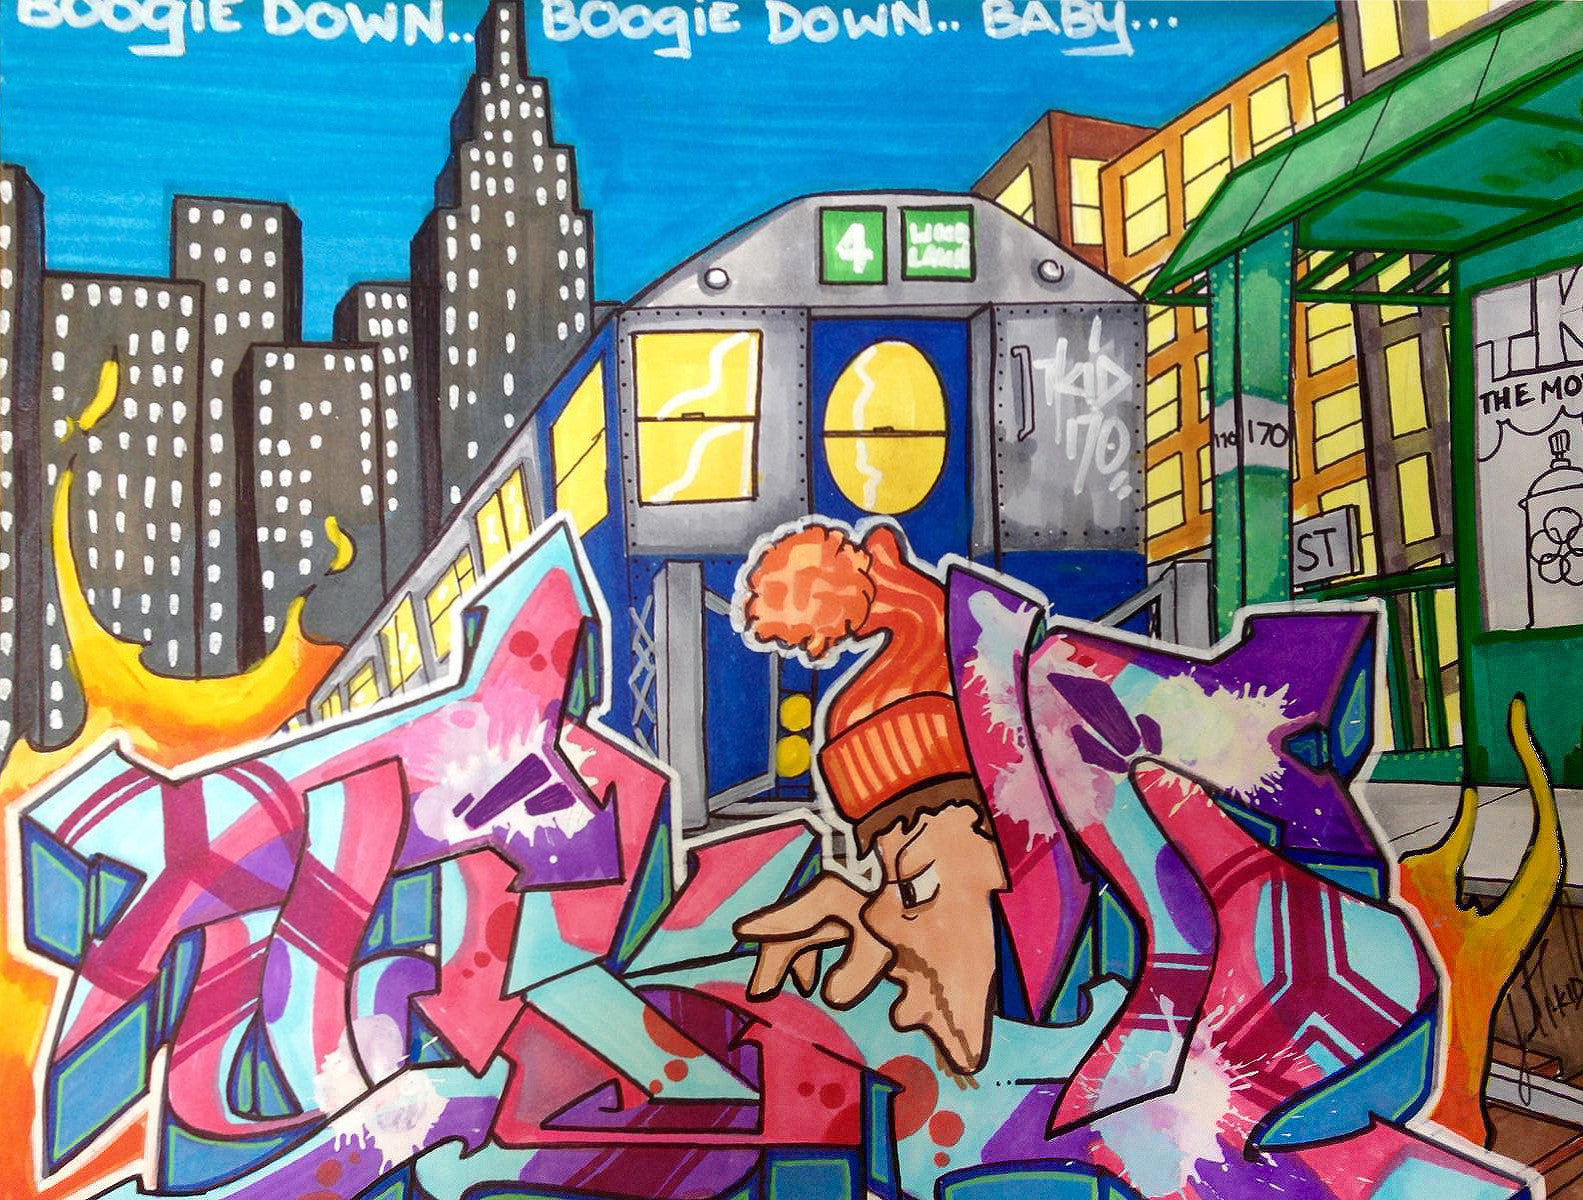 T-KID 170  - "Boogiedown"  Drawing